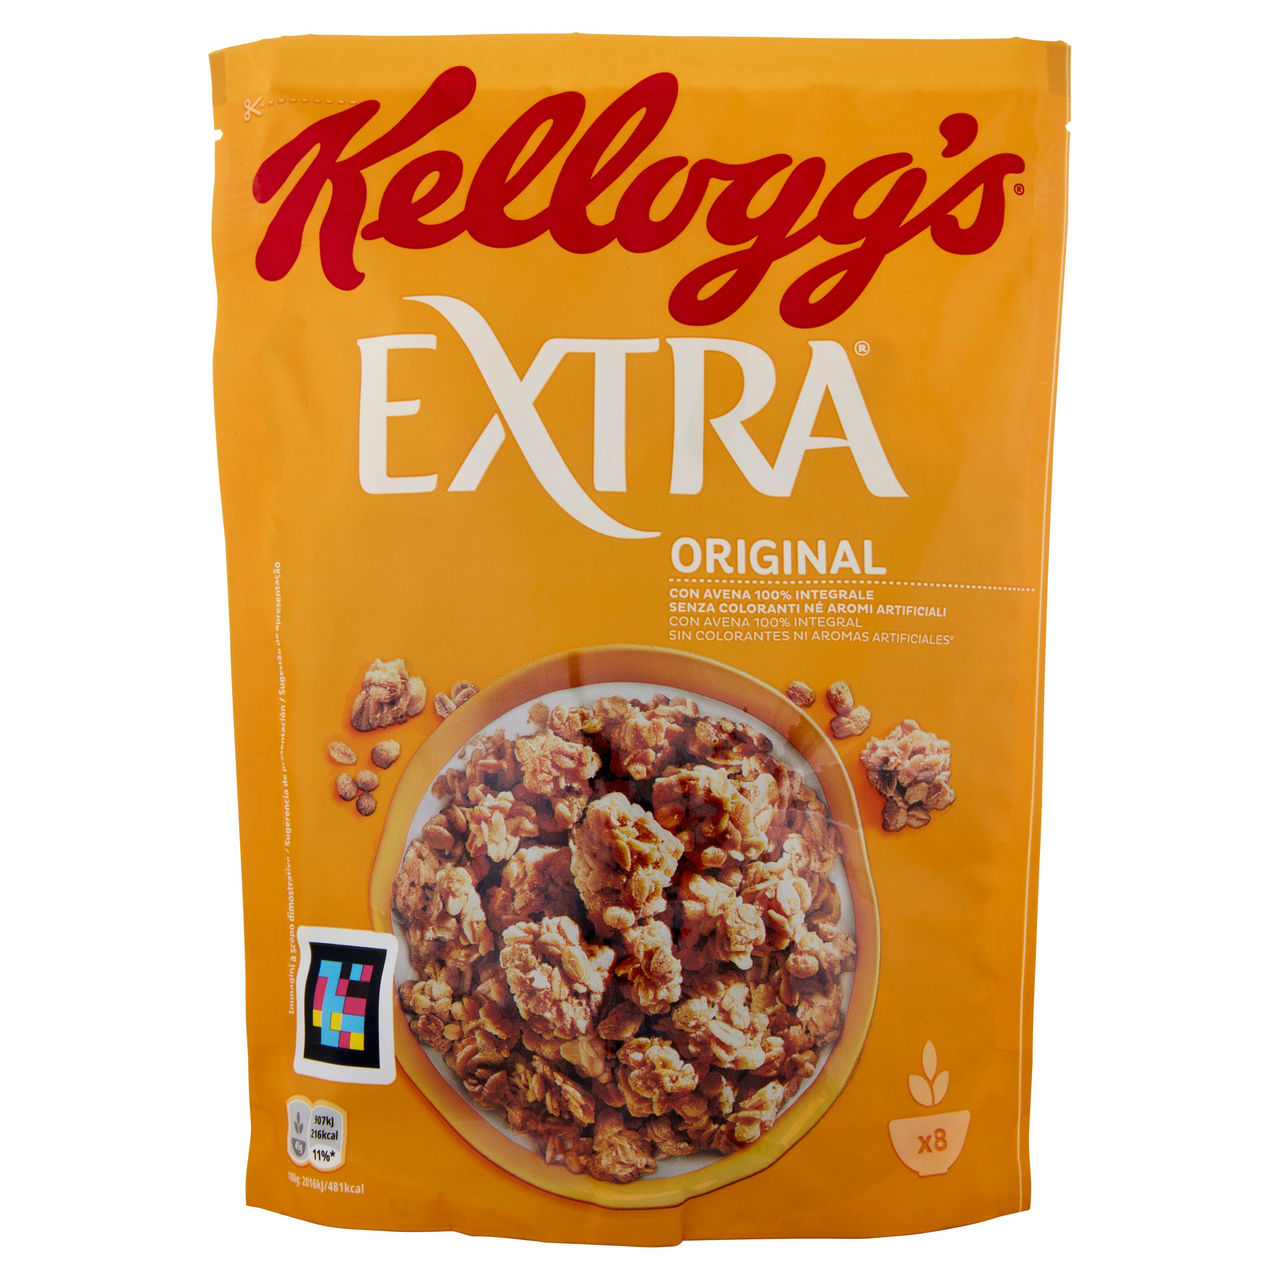 Kellogg's Extra Original 375 g Conad online